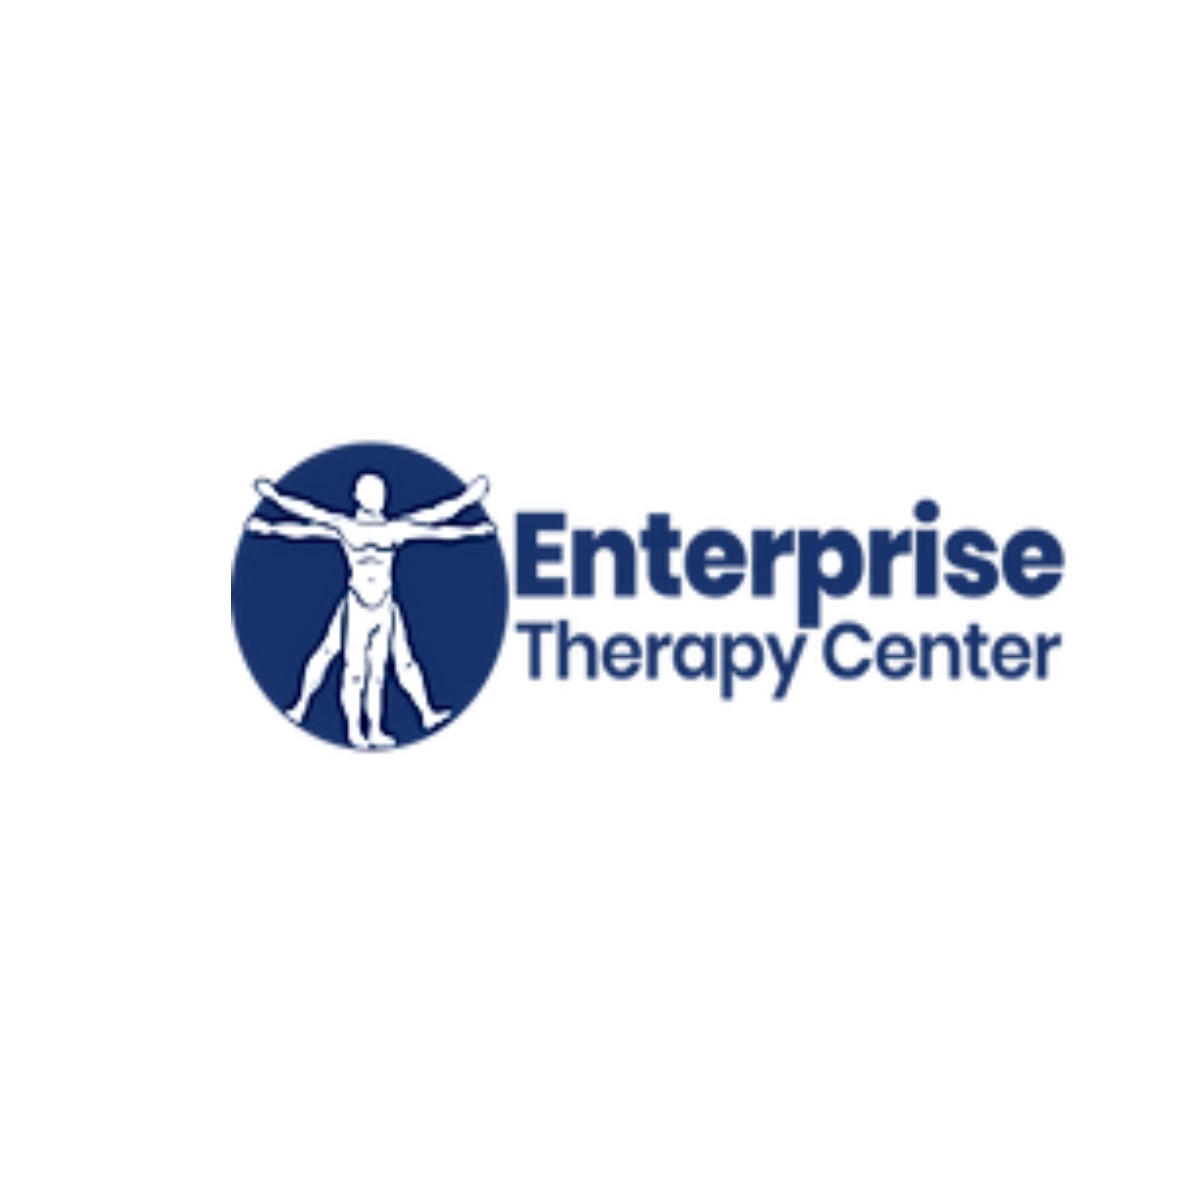 Enterprise Therapy Center - Enterprise, AL 36330 - (334)393-7500 | ShowMeLocal.com